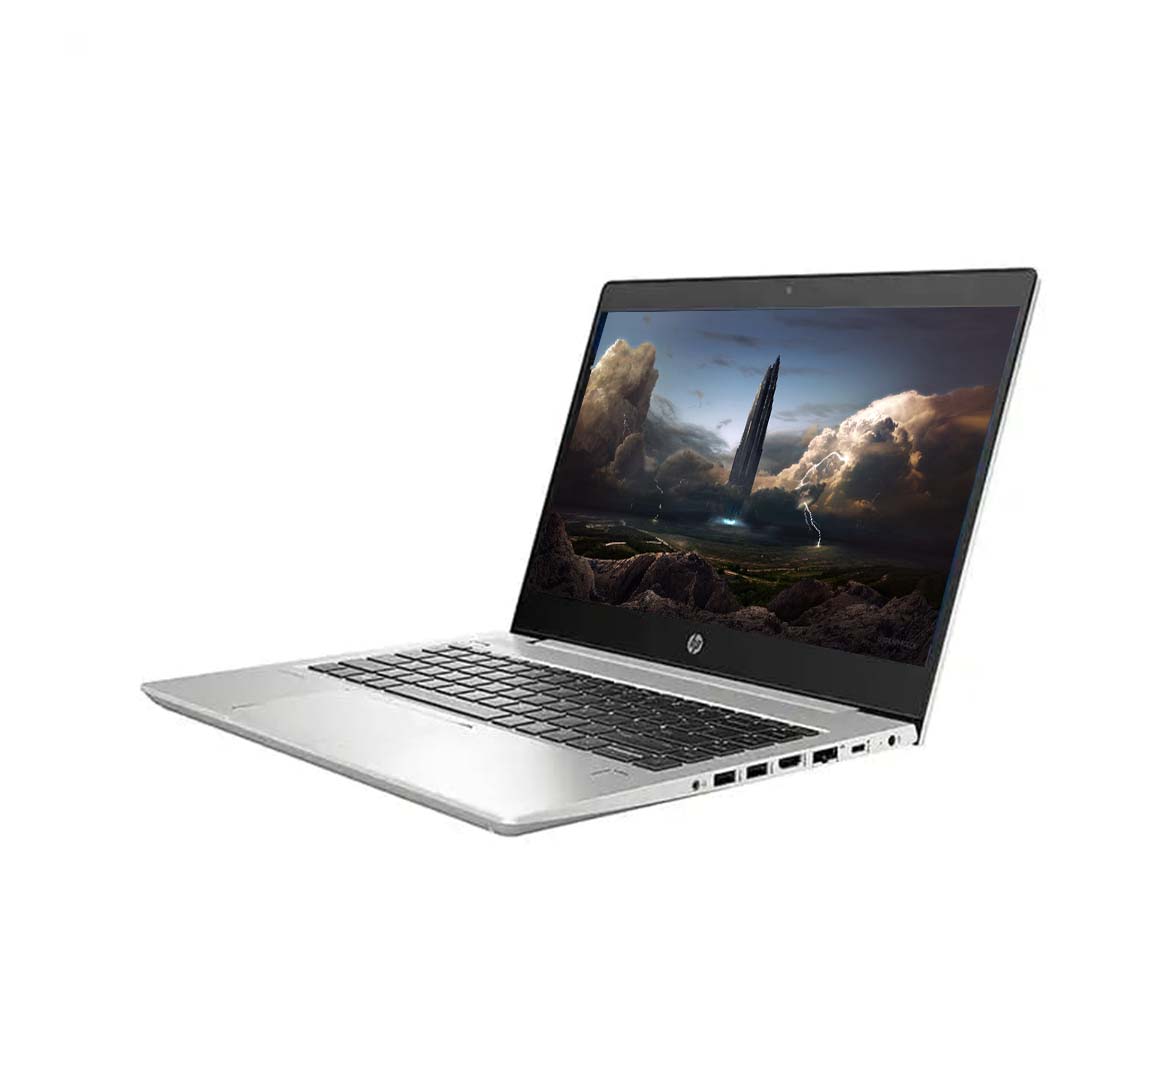 HP  ProBook 440 G6 Business Laptop, Intel Core i5-8th Generation CPU, 8GB RAM, 256GB SSD, 14 inch Display, Windows 10 Pro